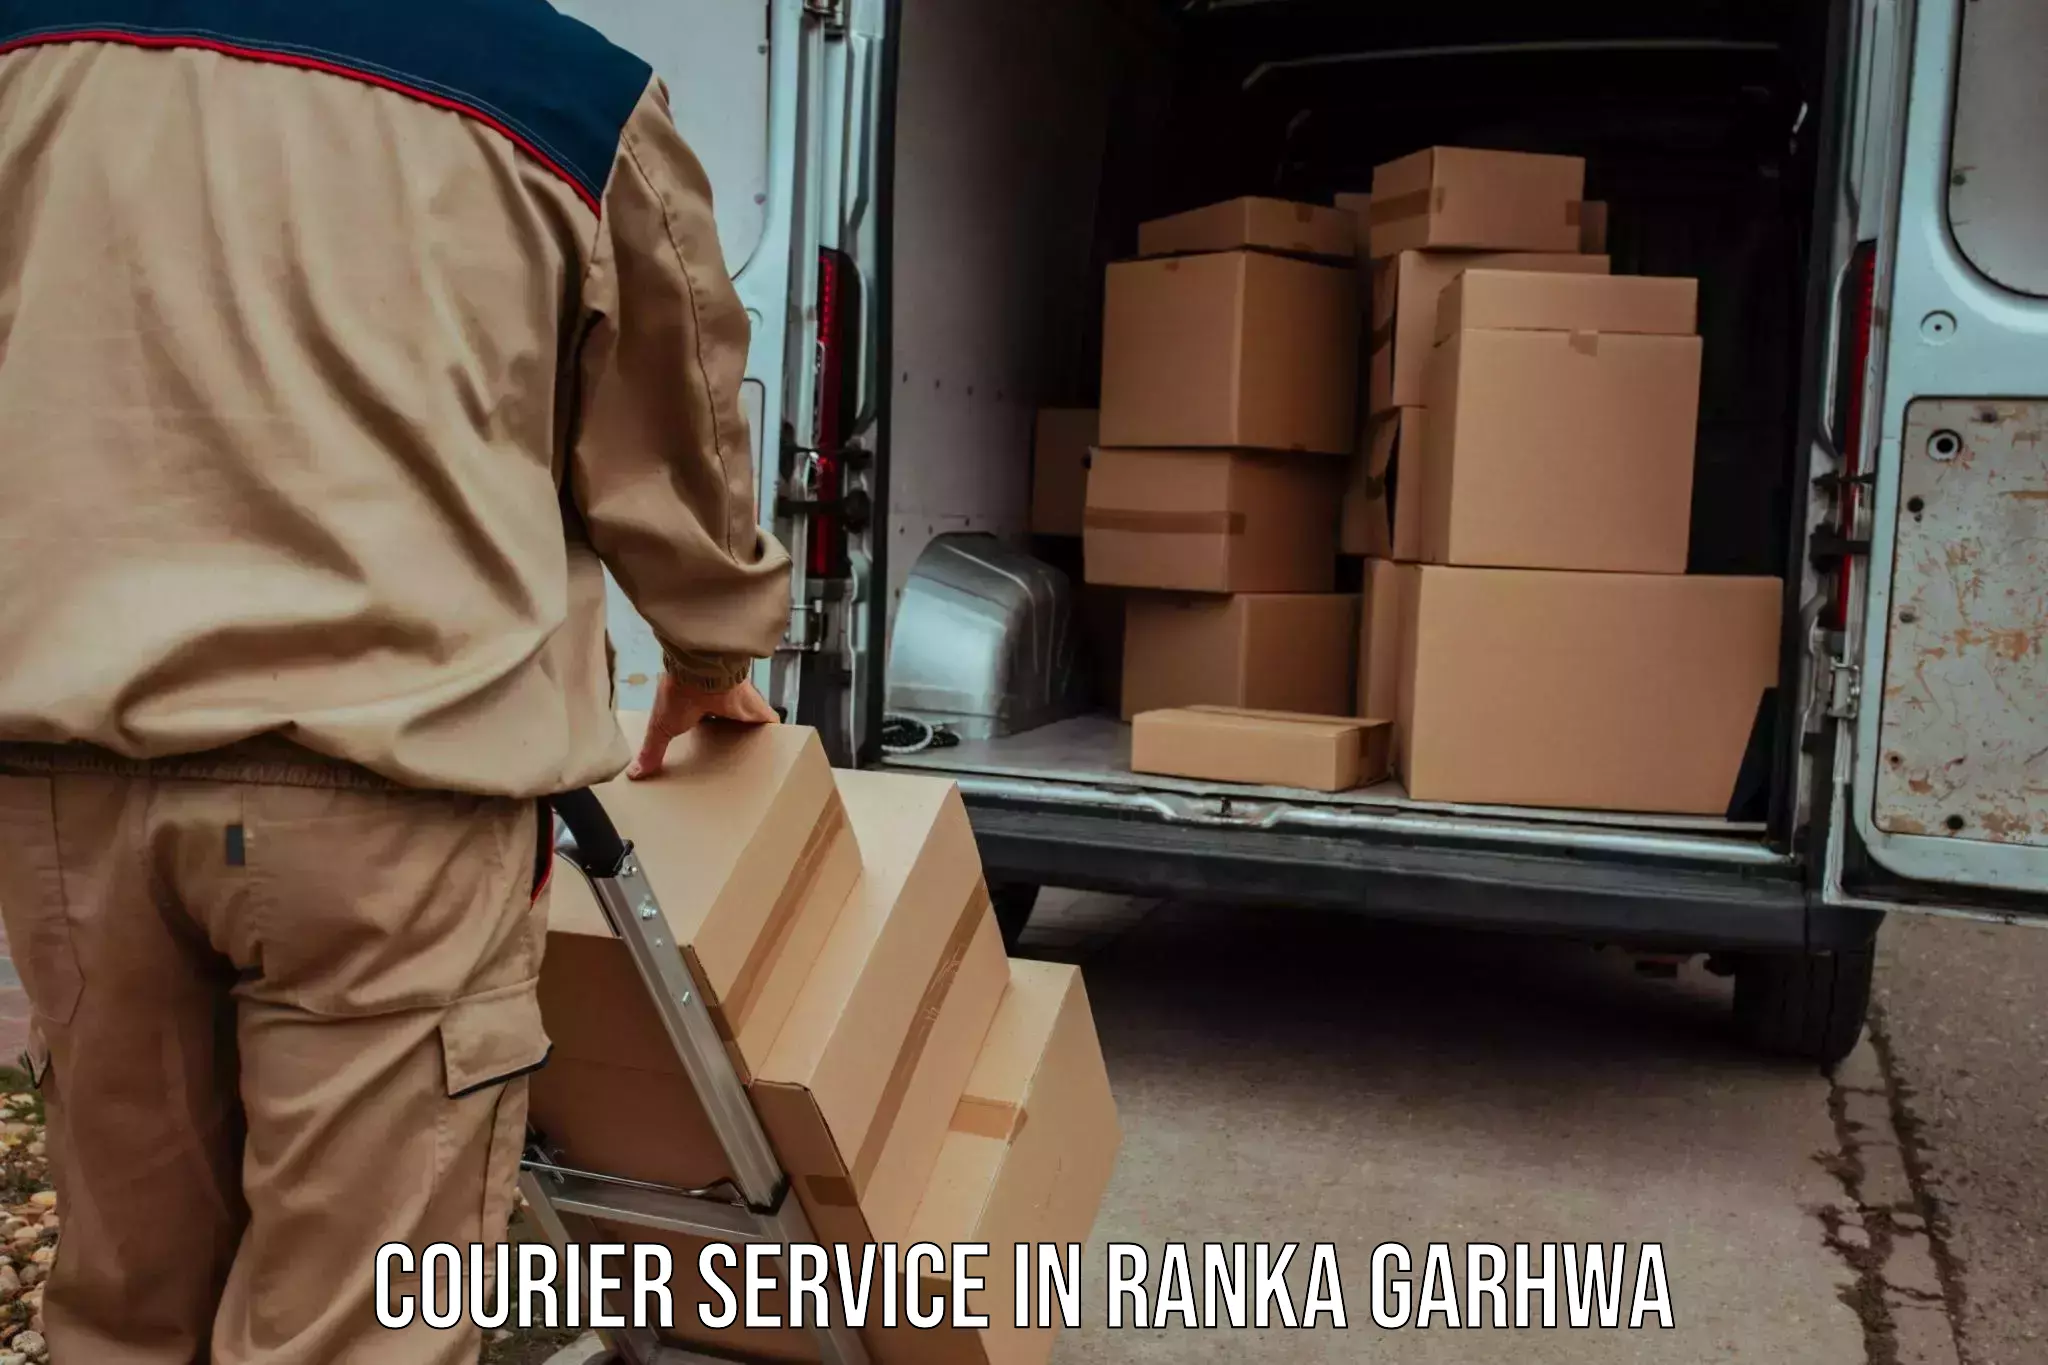 Modern delivery methods in Ranka Garhwa